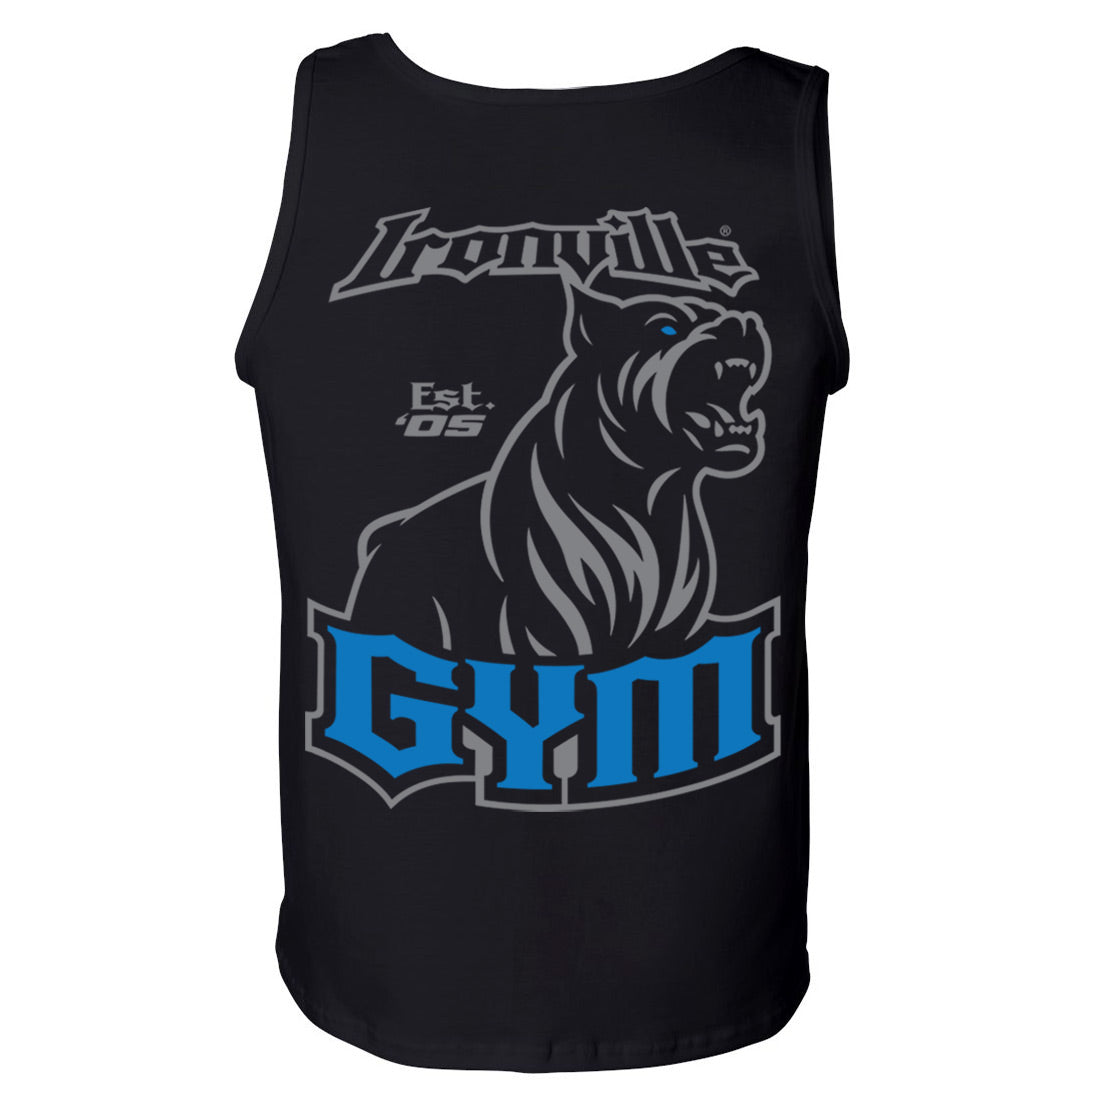 Ironville GYM PITBULL Standard Cut Gym Tank Top